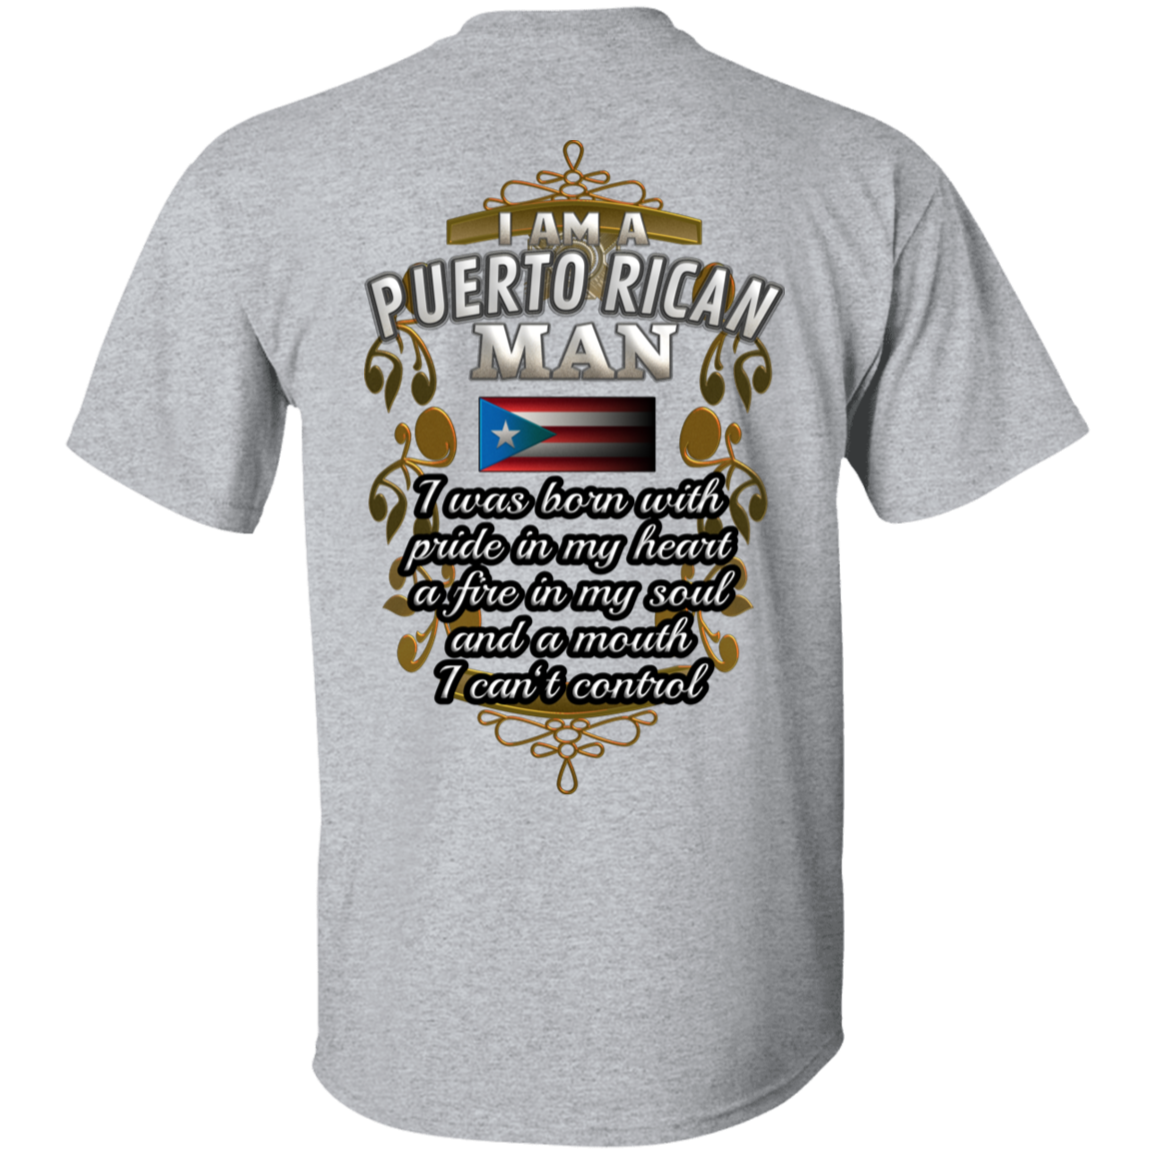 Puerto Rican Man 5.3 oz. T-Shirt